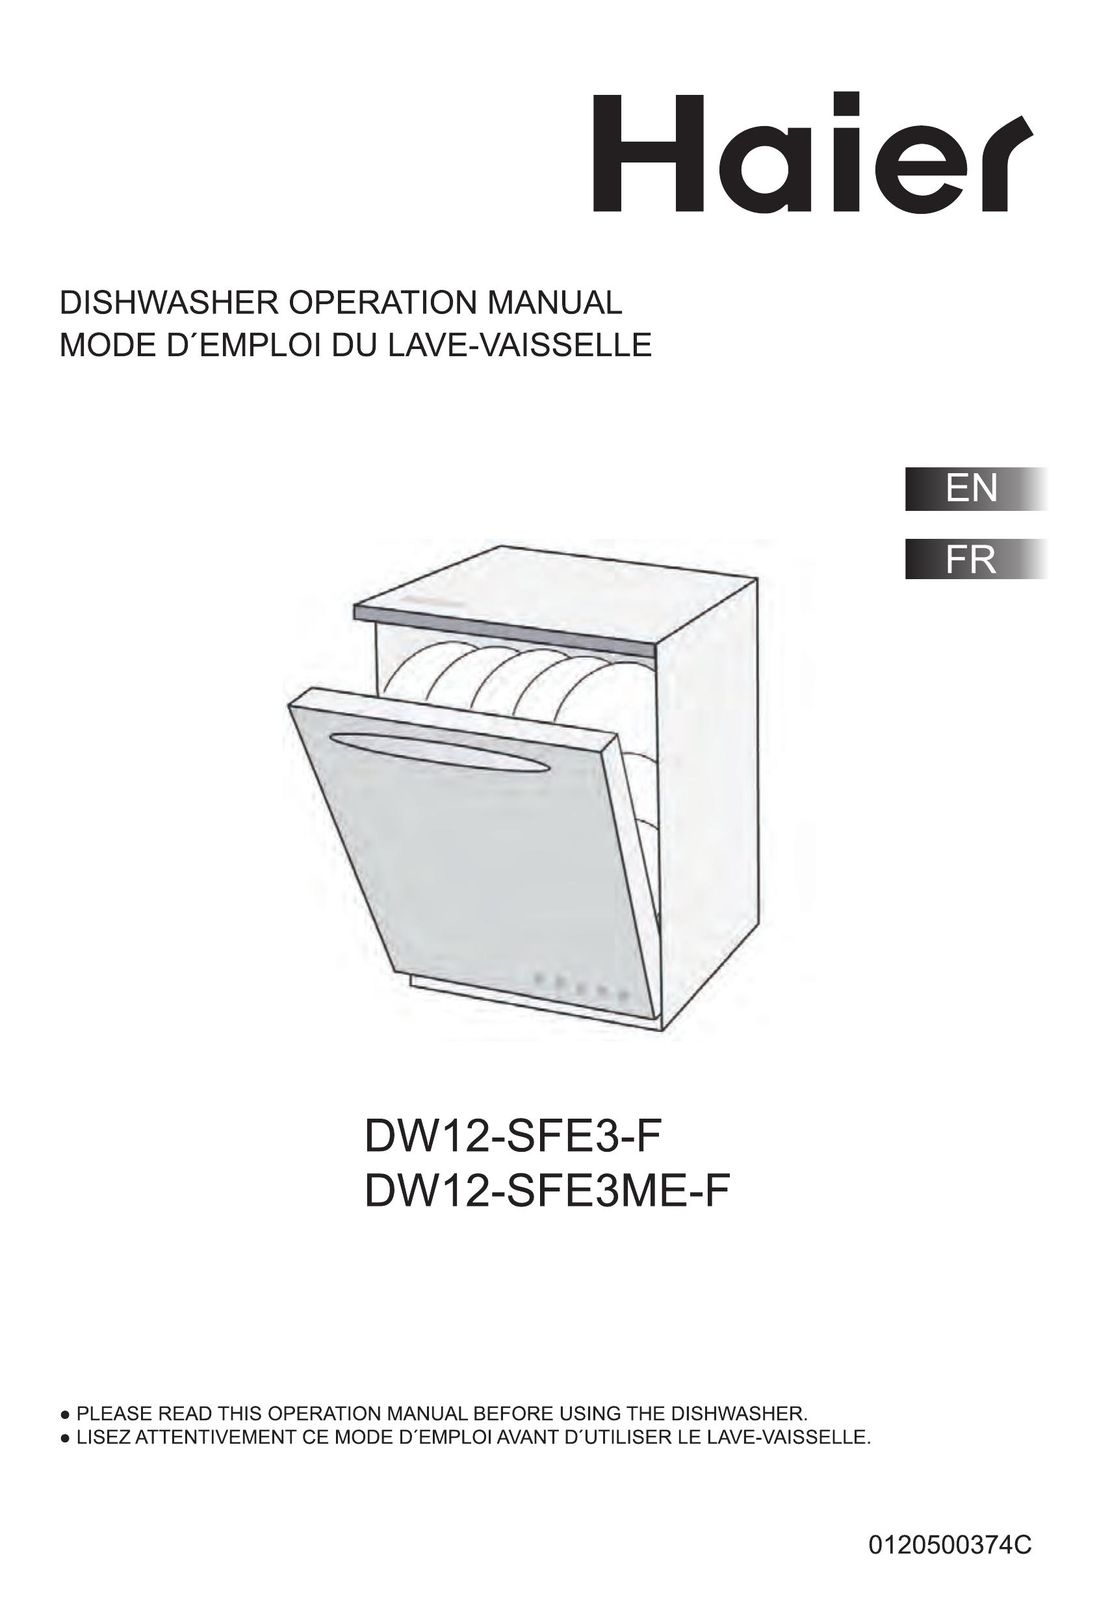 Haier DW12-SFE3ME-F Dishwasher User Manual